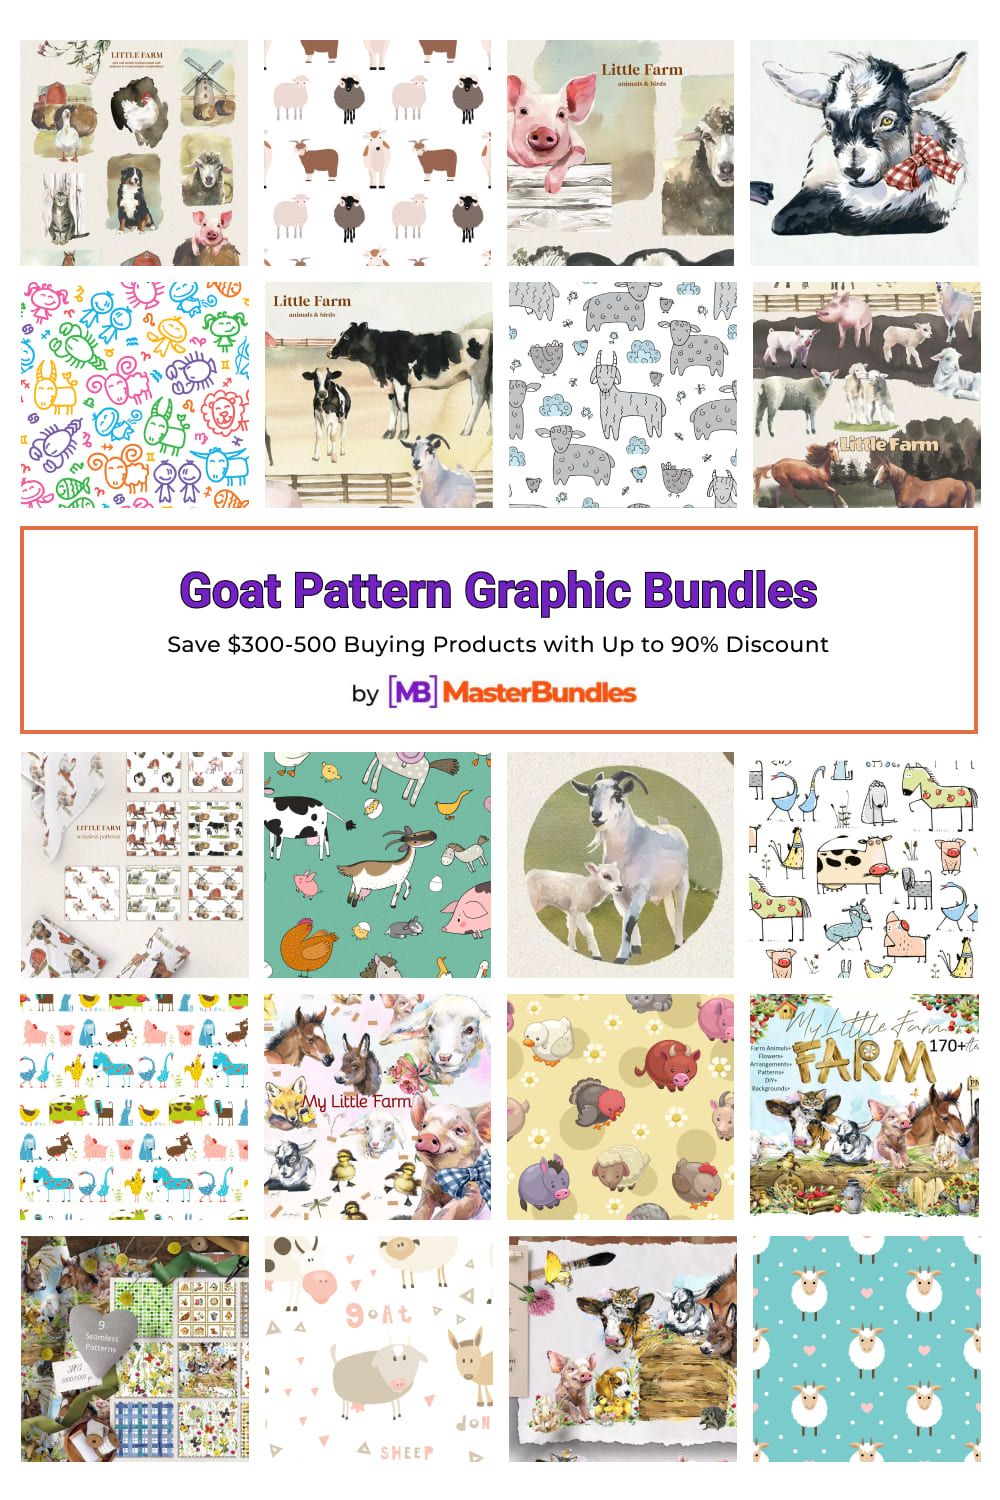 Goat Pattern Graphic Bundles for Pinterest.